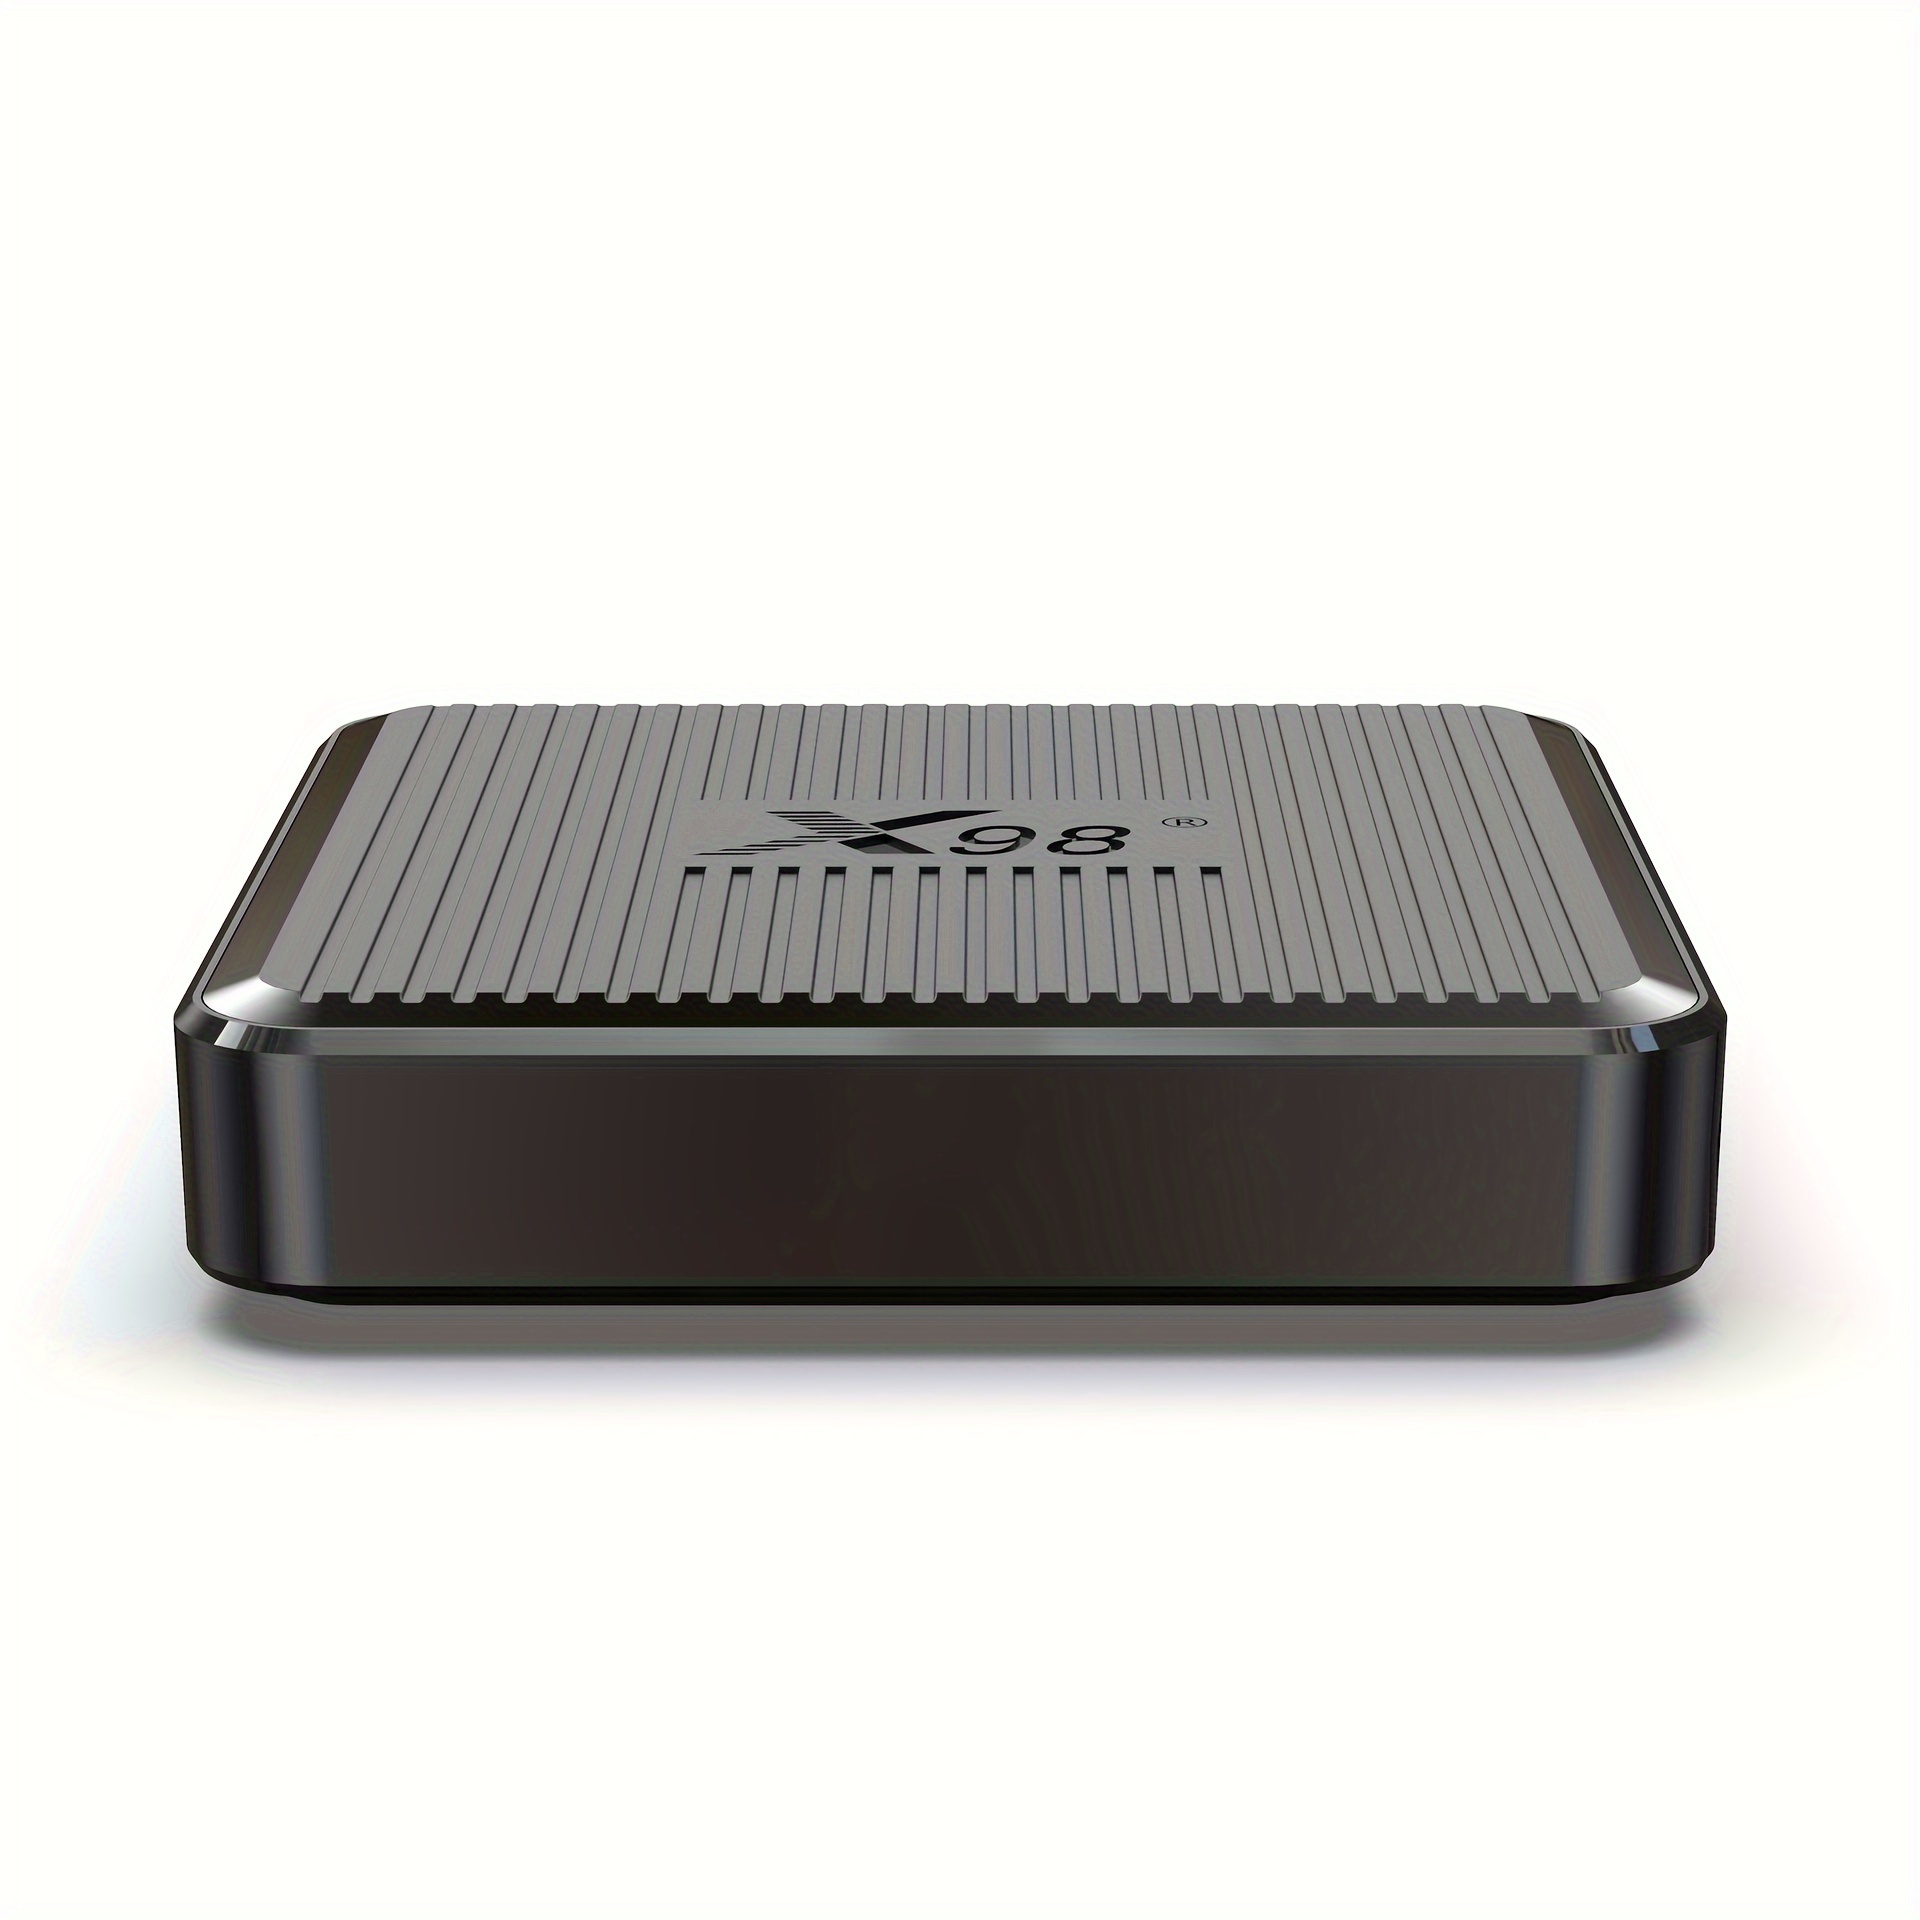 X98Q Amlogic S905W2 Quad Core 4K Dual WiFi TV Box – Android TV Box  Manufacturer Supplier